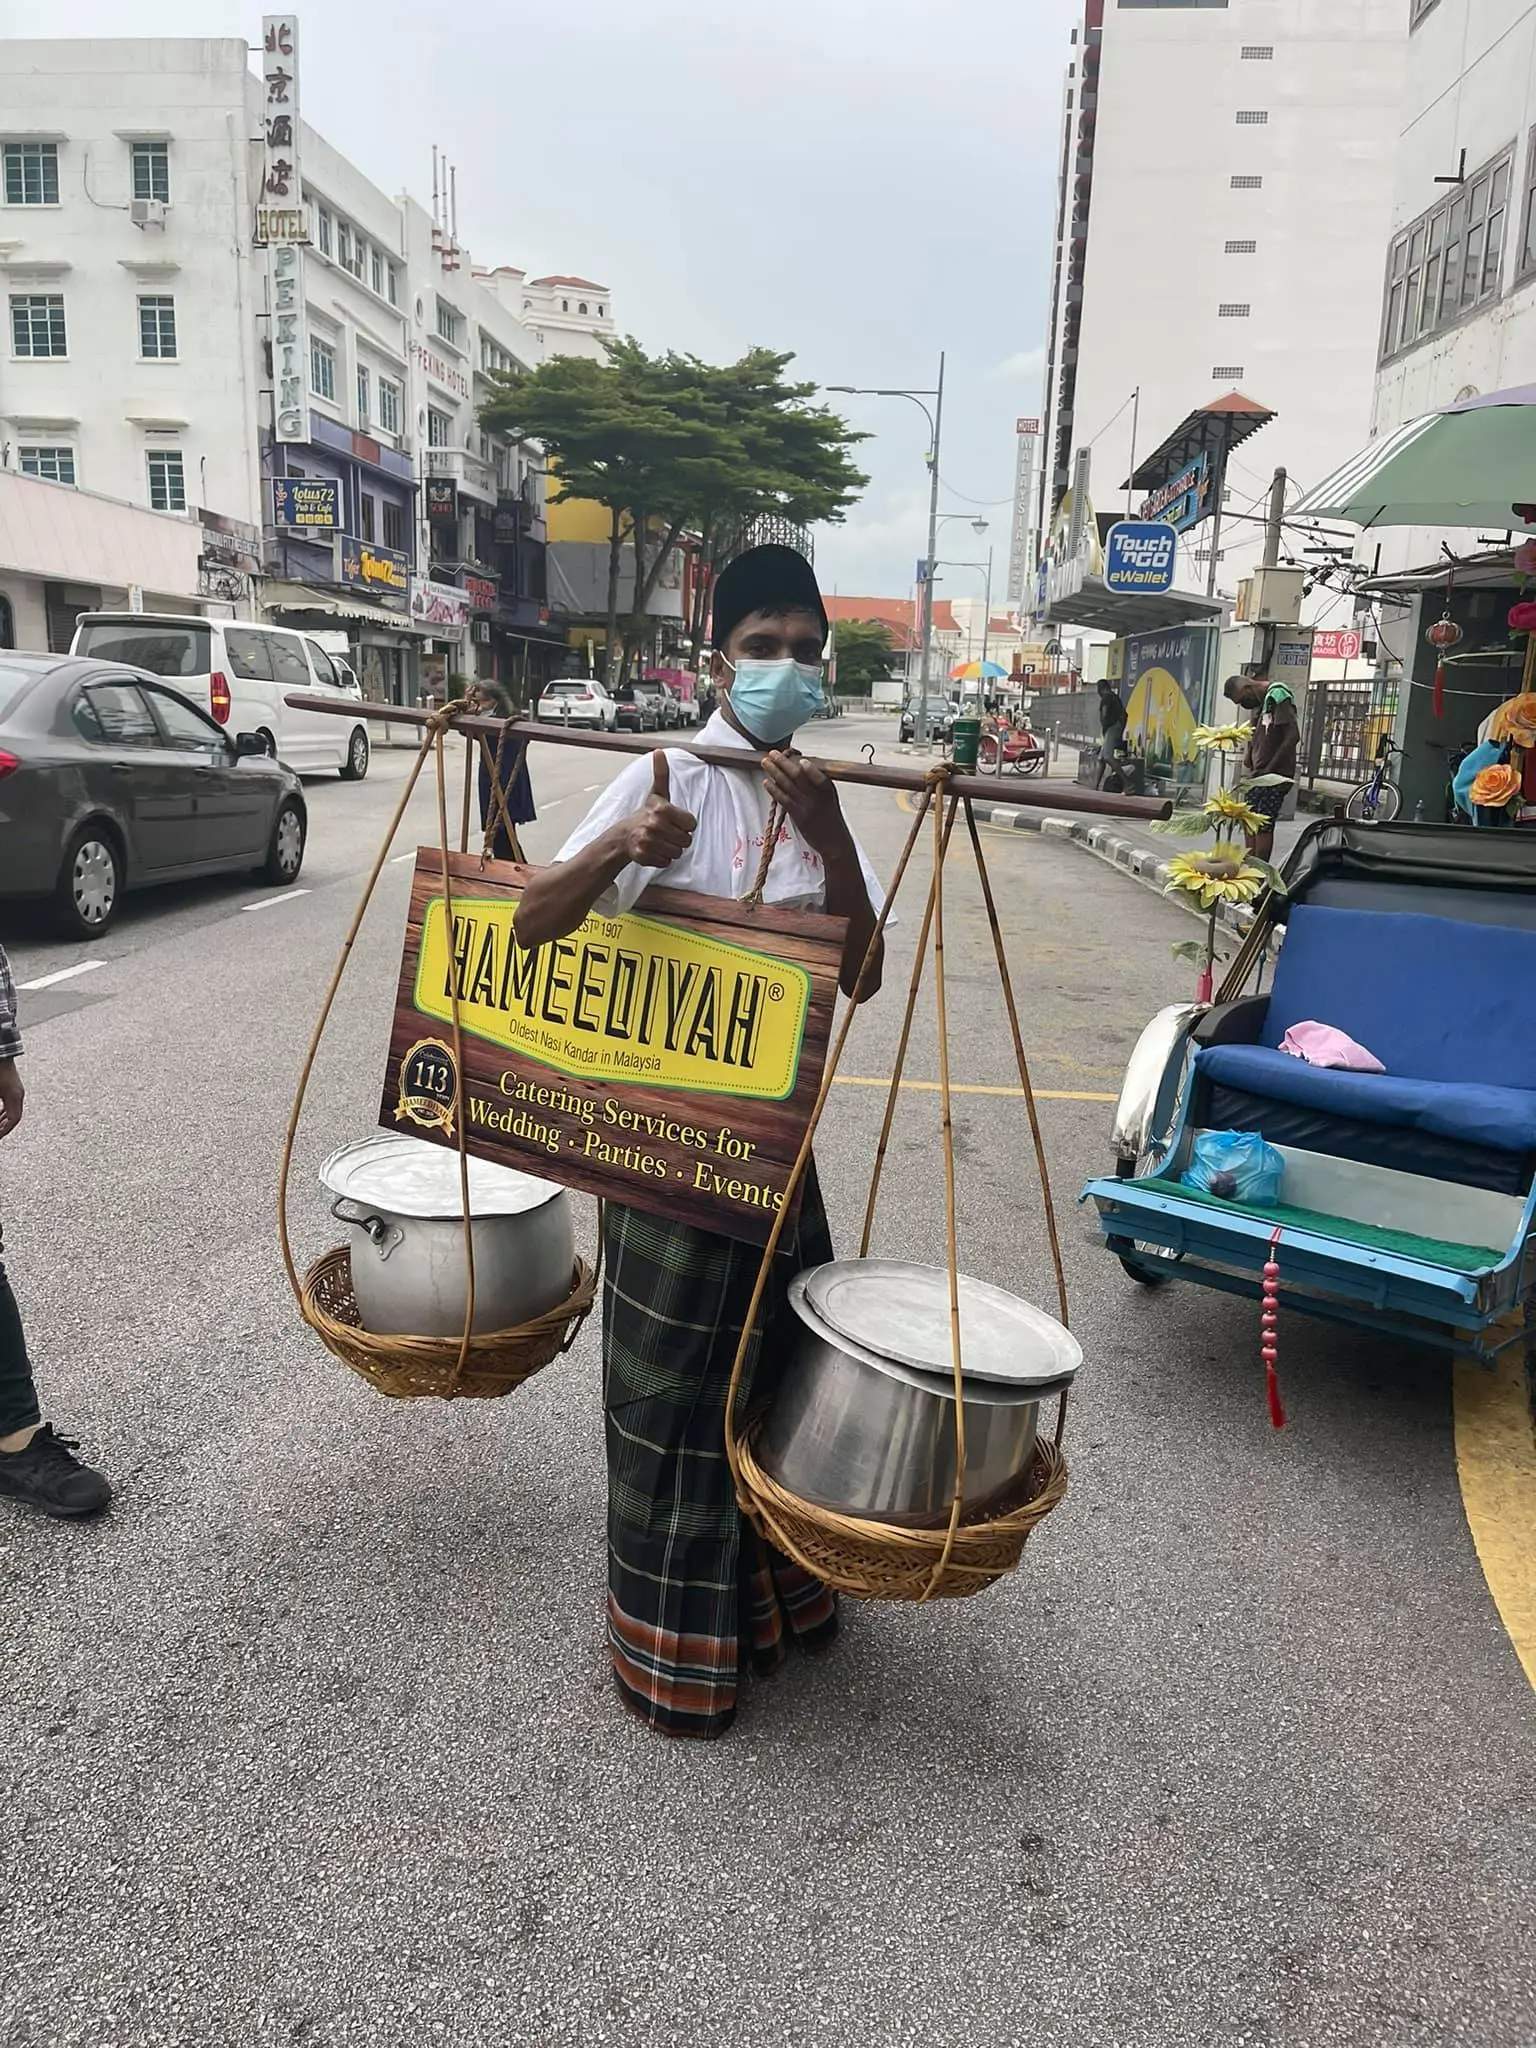 Penang’s oldest nasi kandar restaurant distributes food to the needy the traditional way | weirdkaya